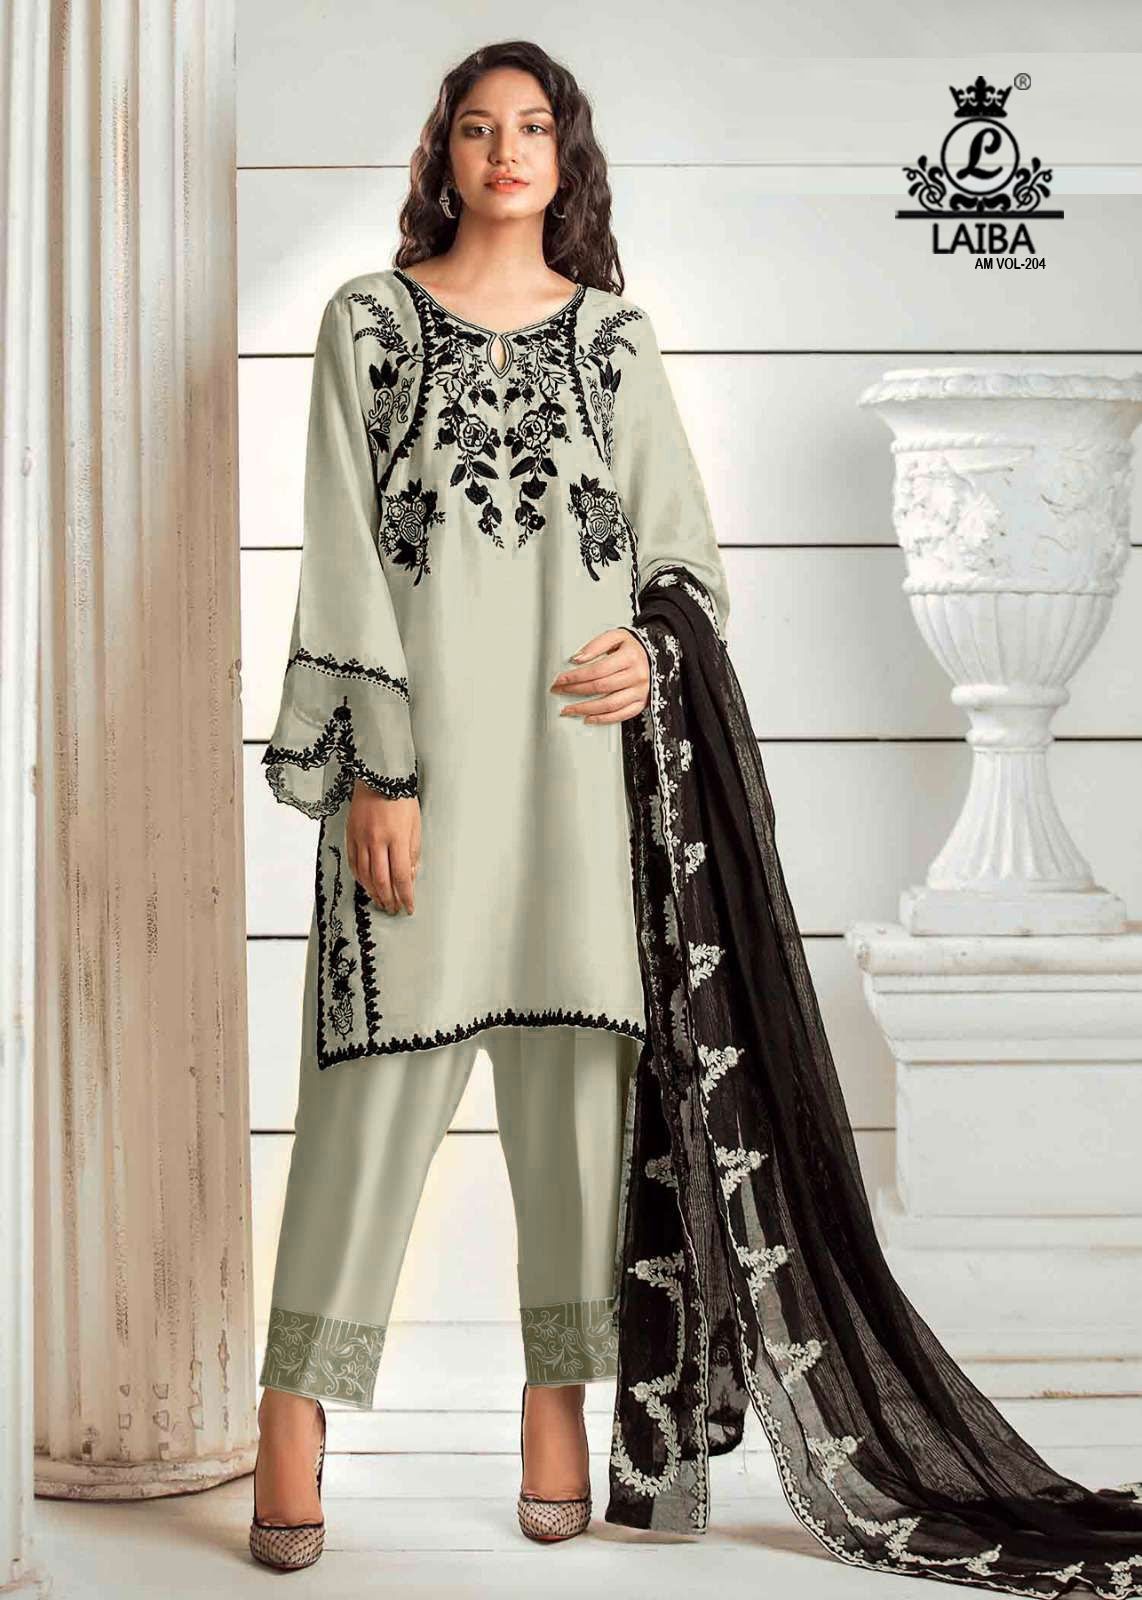 Am Vol 204 Laiba Georgette Pakistani Readymade Suits